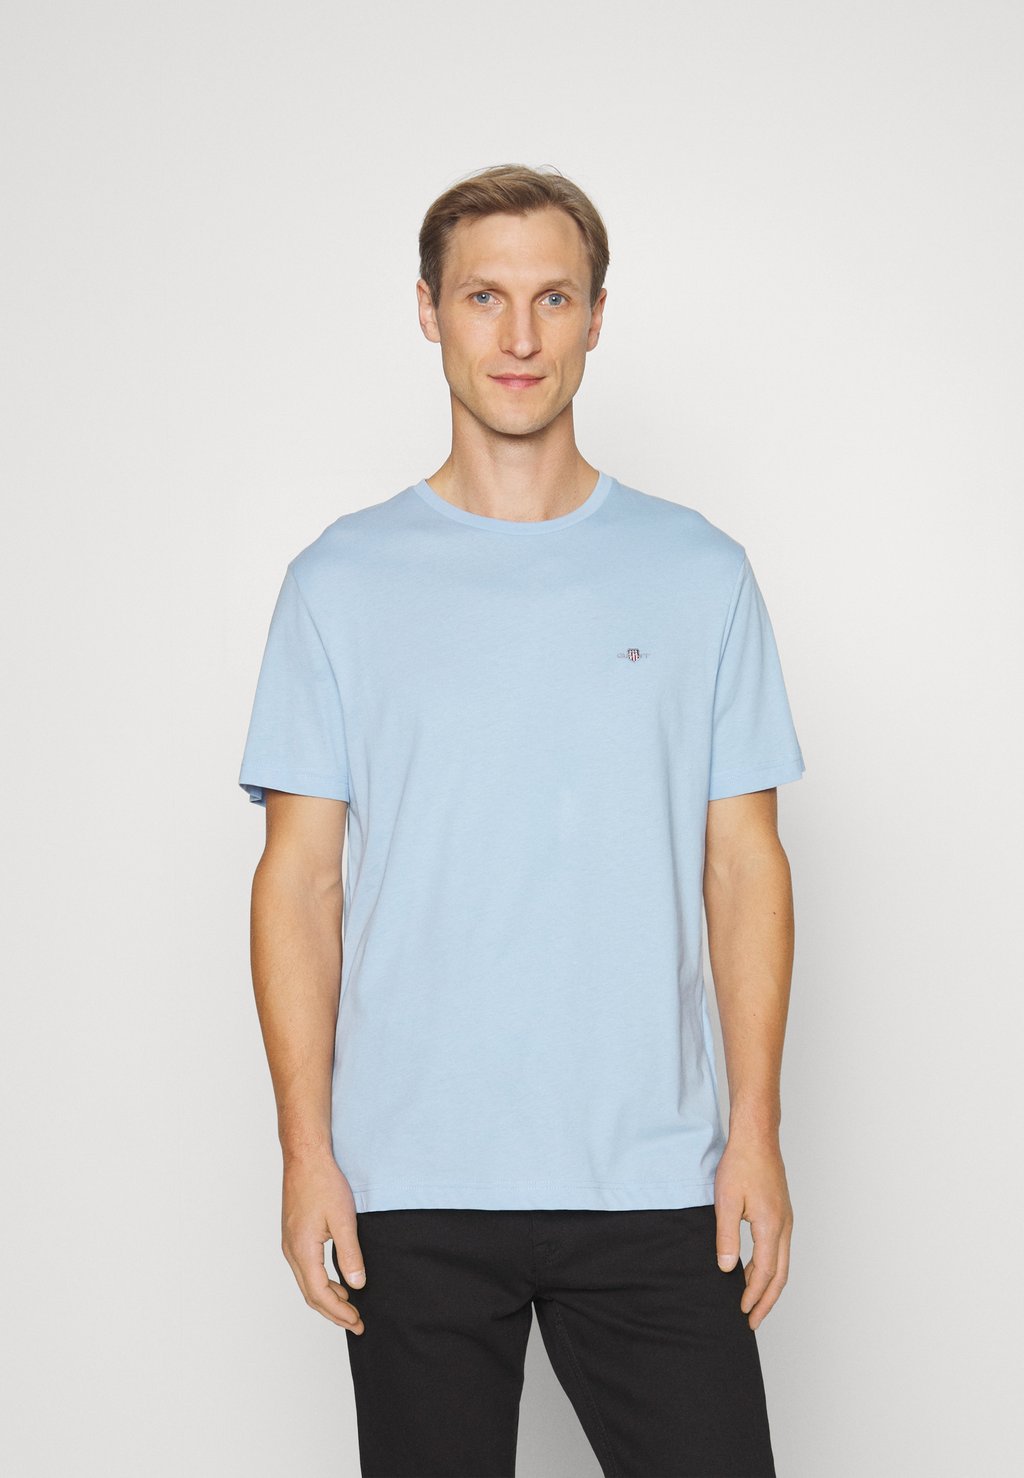 Базовая футболка REG SHIELD GANT, капри синий базовая футболка reg shield gant цвет mottled blue